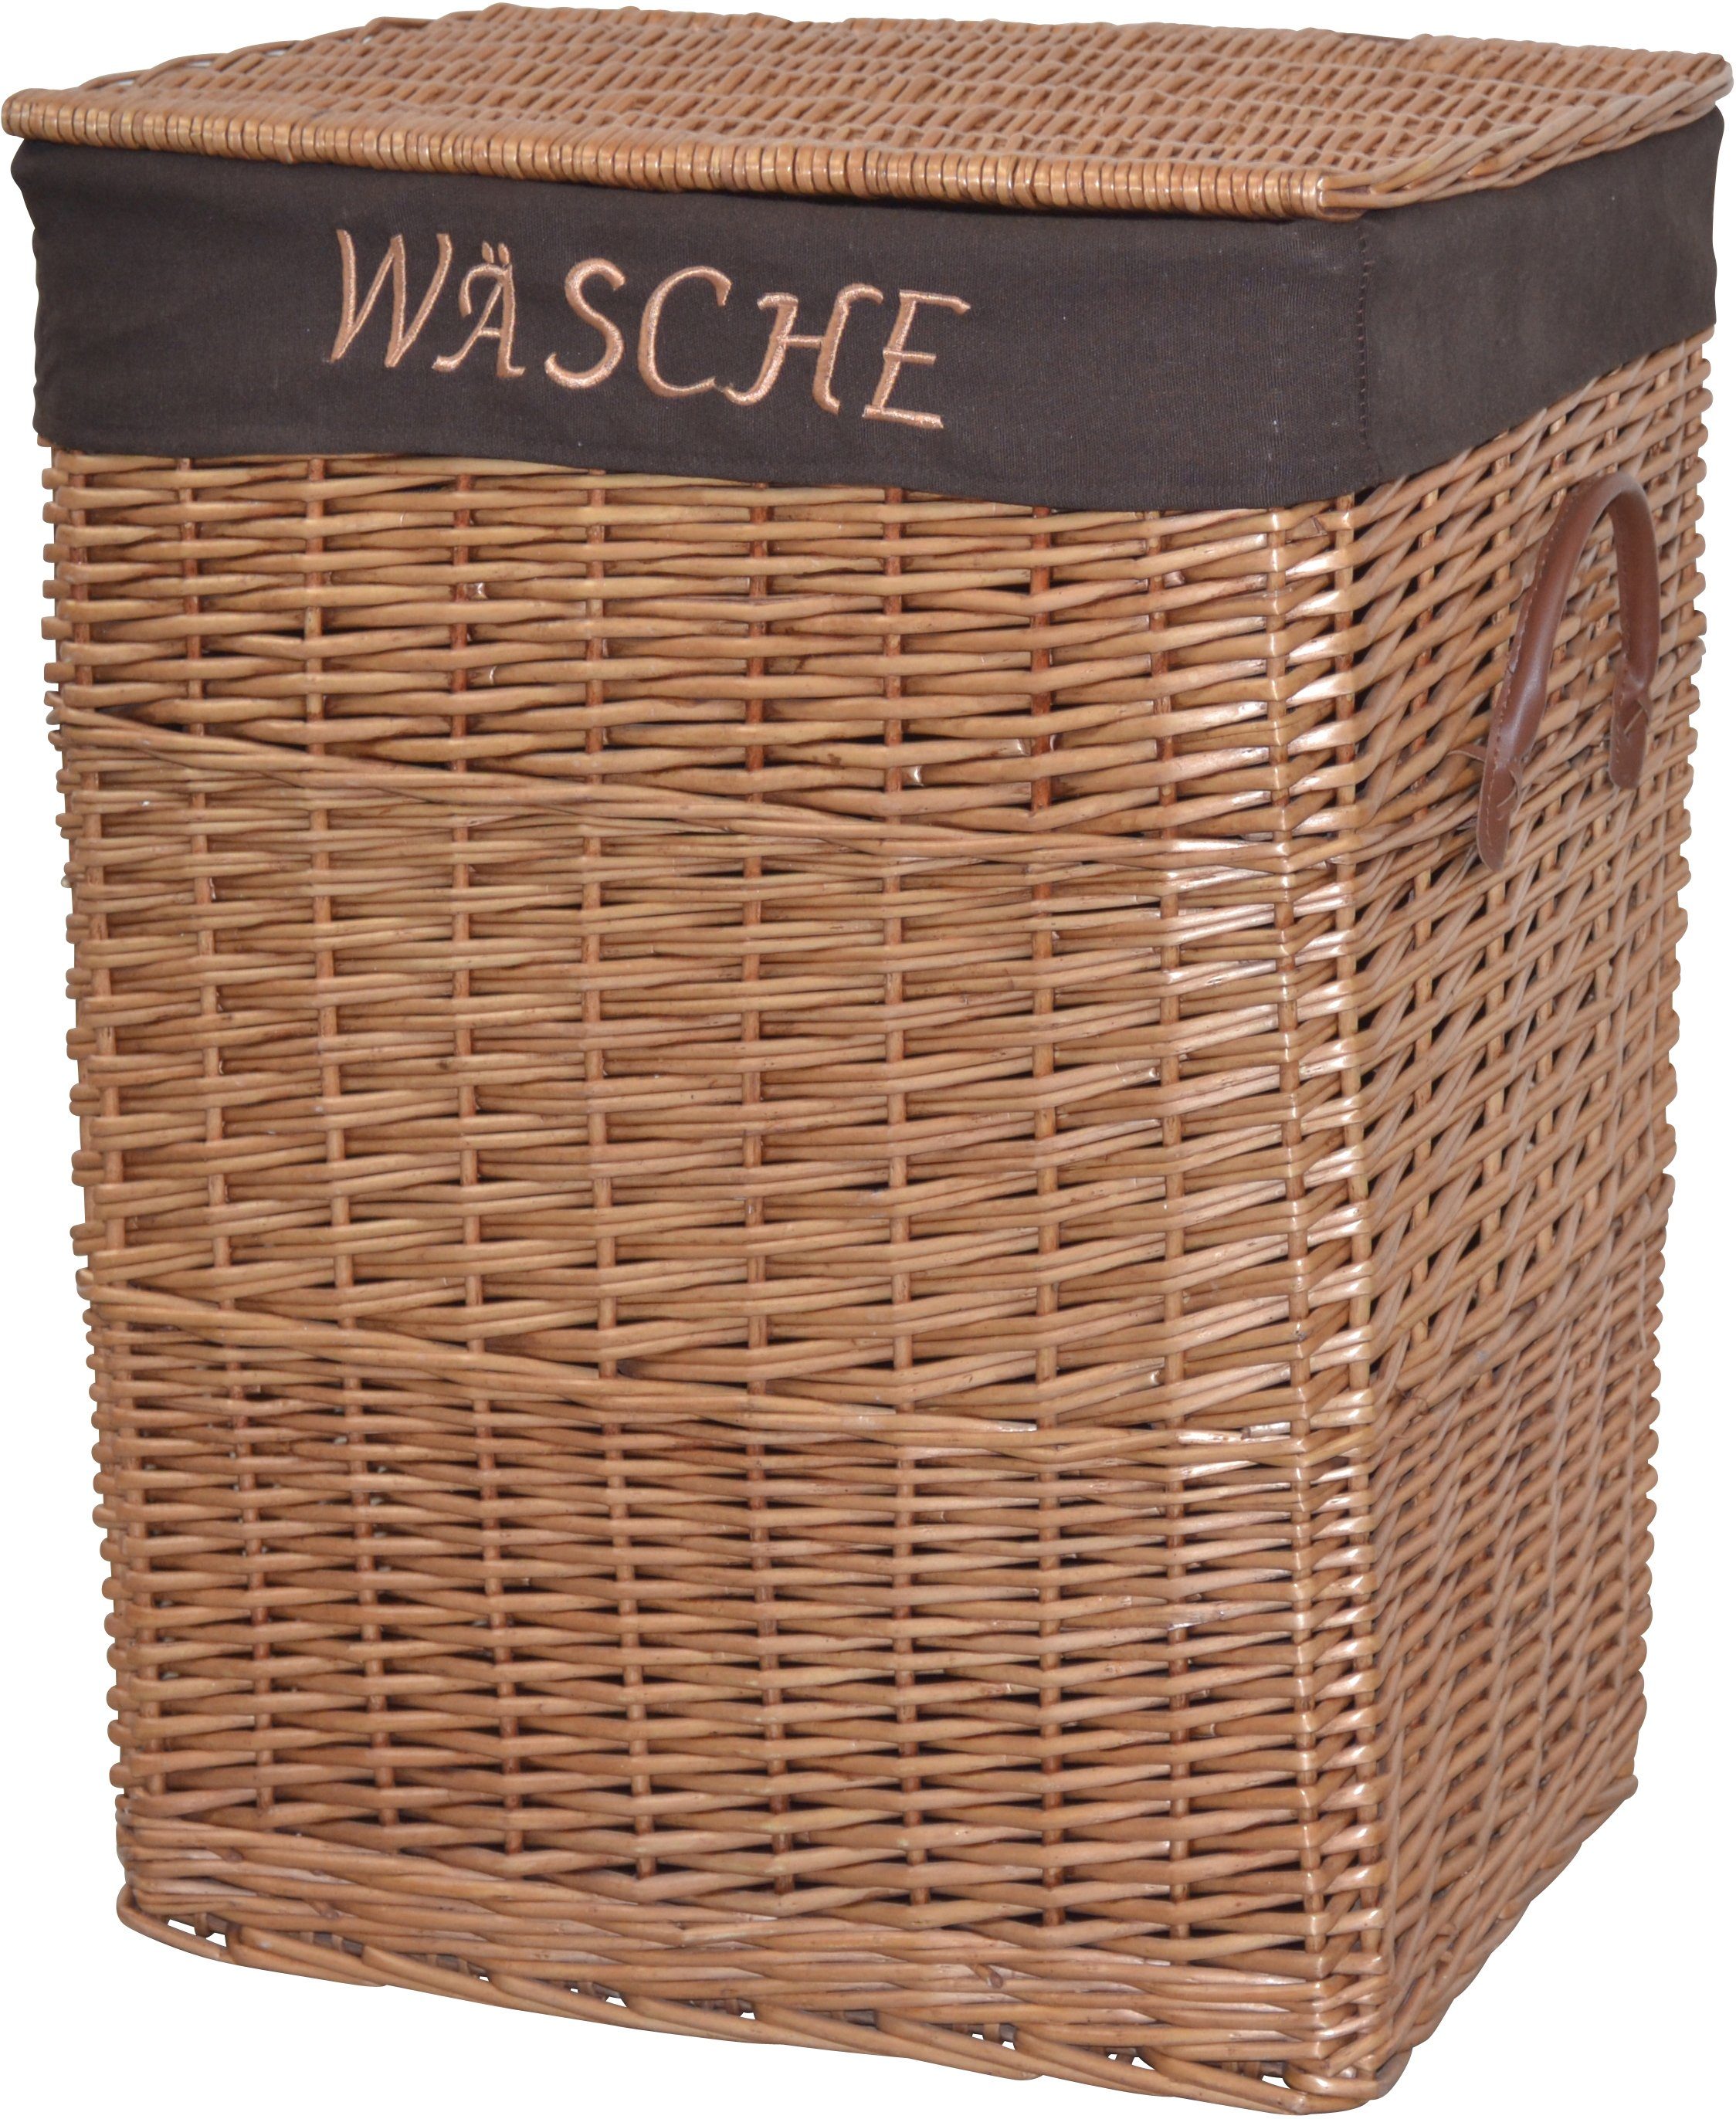 HOFMANN LIVING AND braun Stoffeinsatz, mit Wäschekorb, aus MORE 47x35x61cm herausnehmbarem handgefertigt Weide